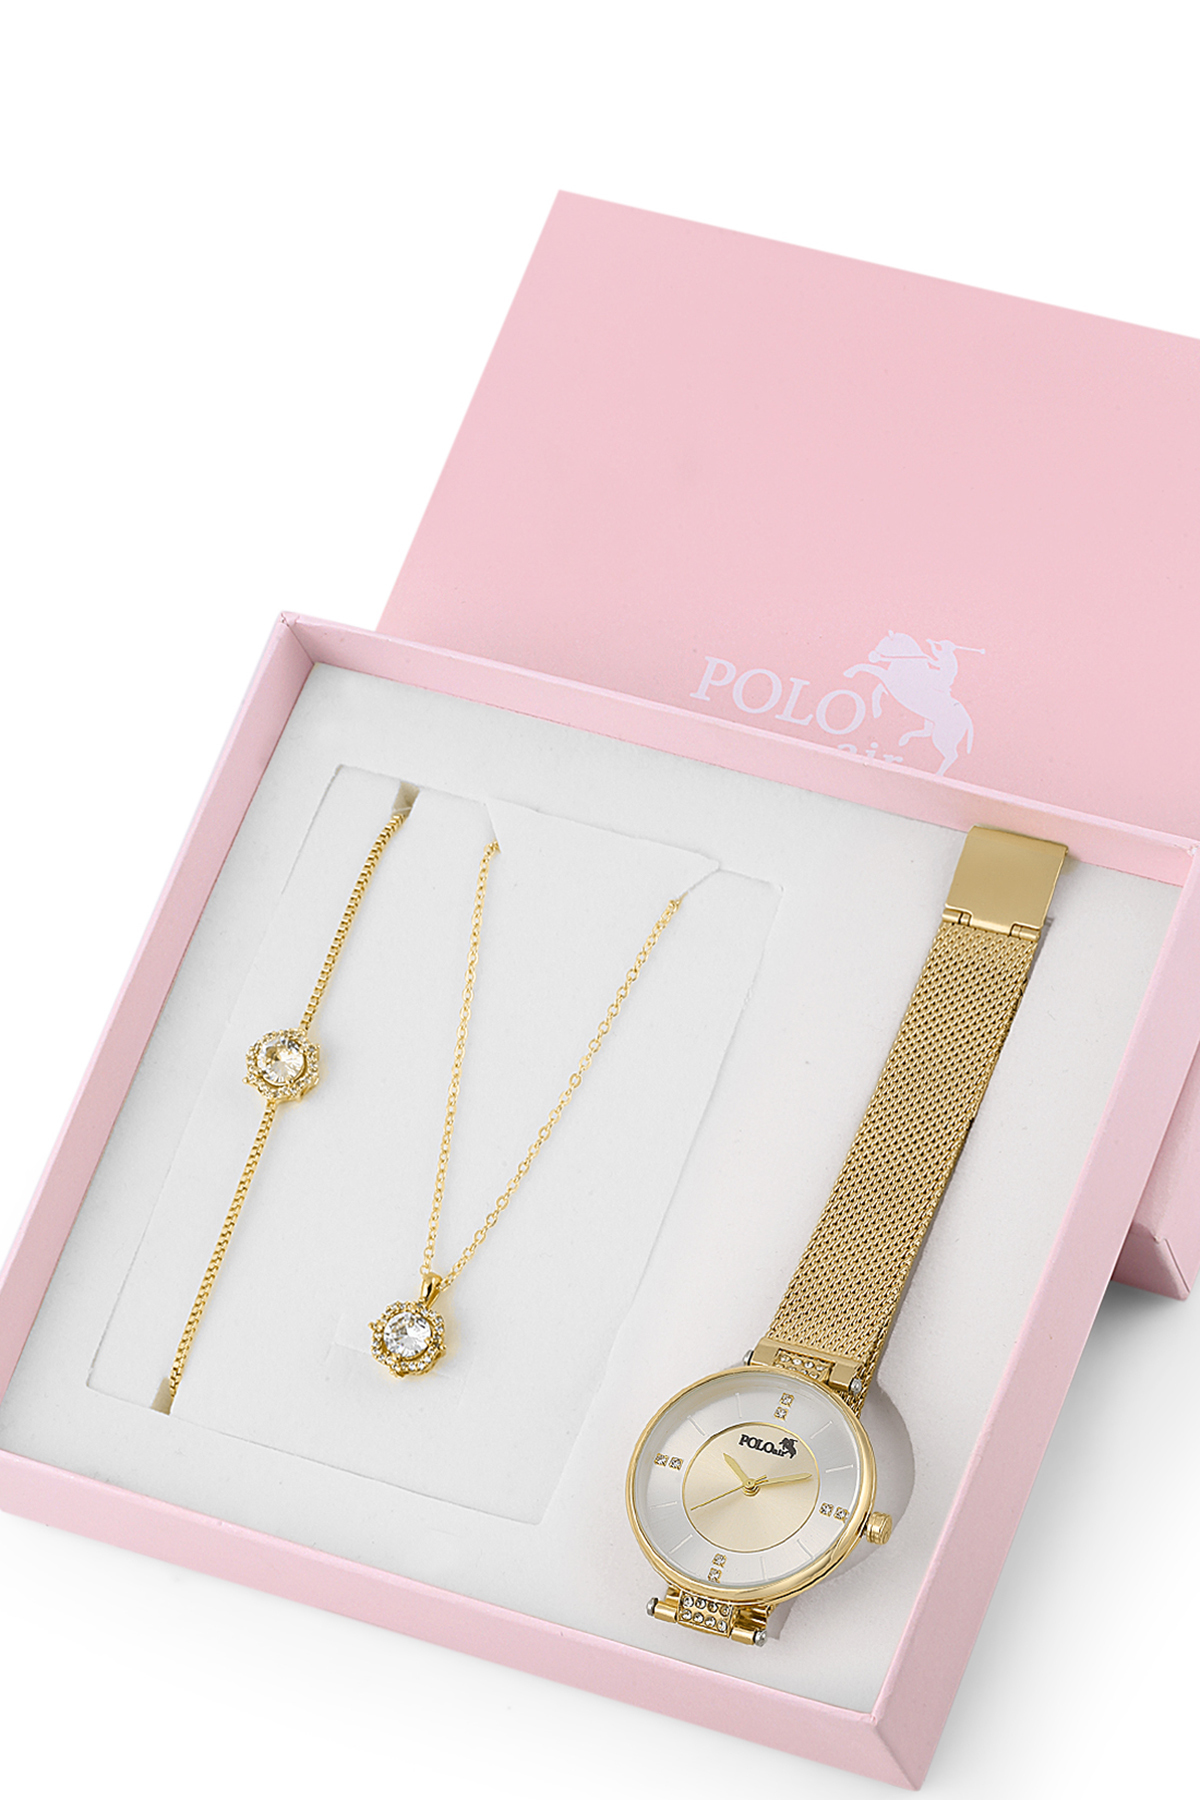 Polo Air Wicker Cord Women's Wristwatch Zircon Stone Necklace Bracelet Special Combination Set Gold Color